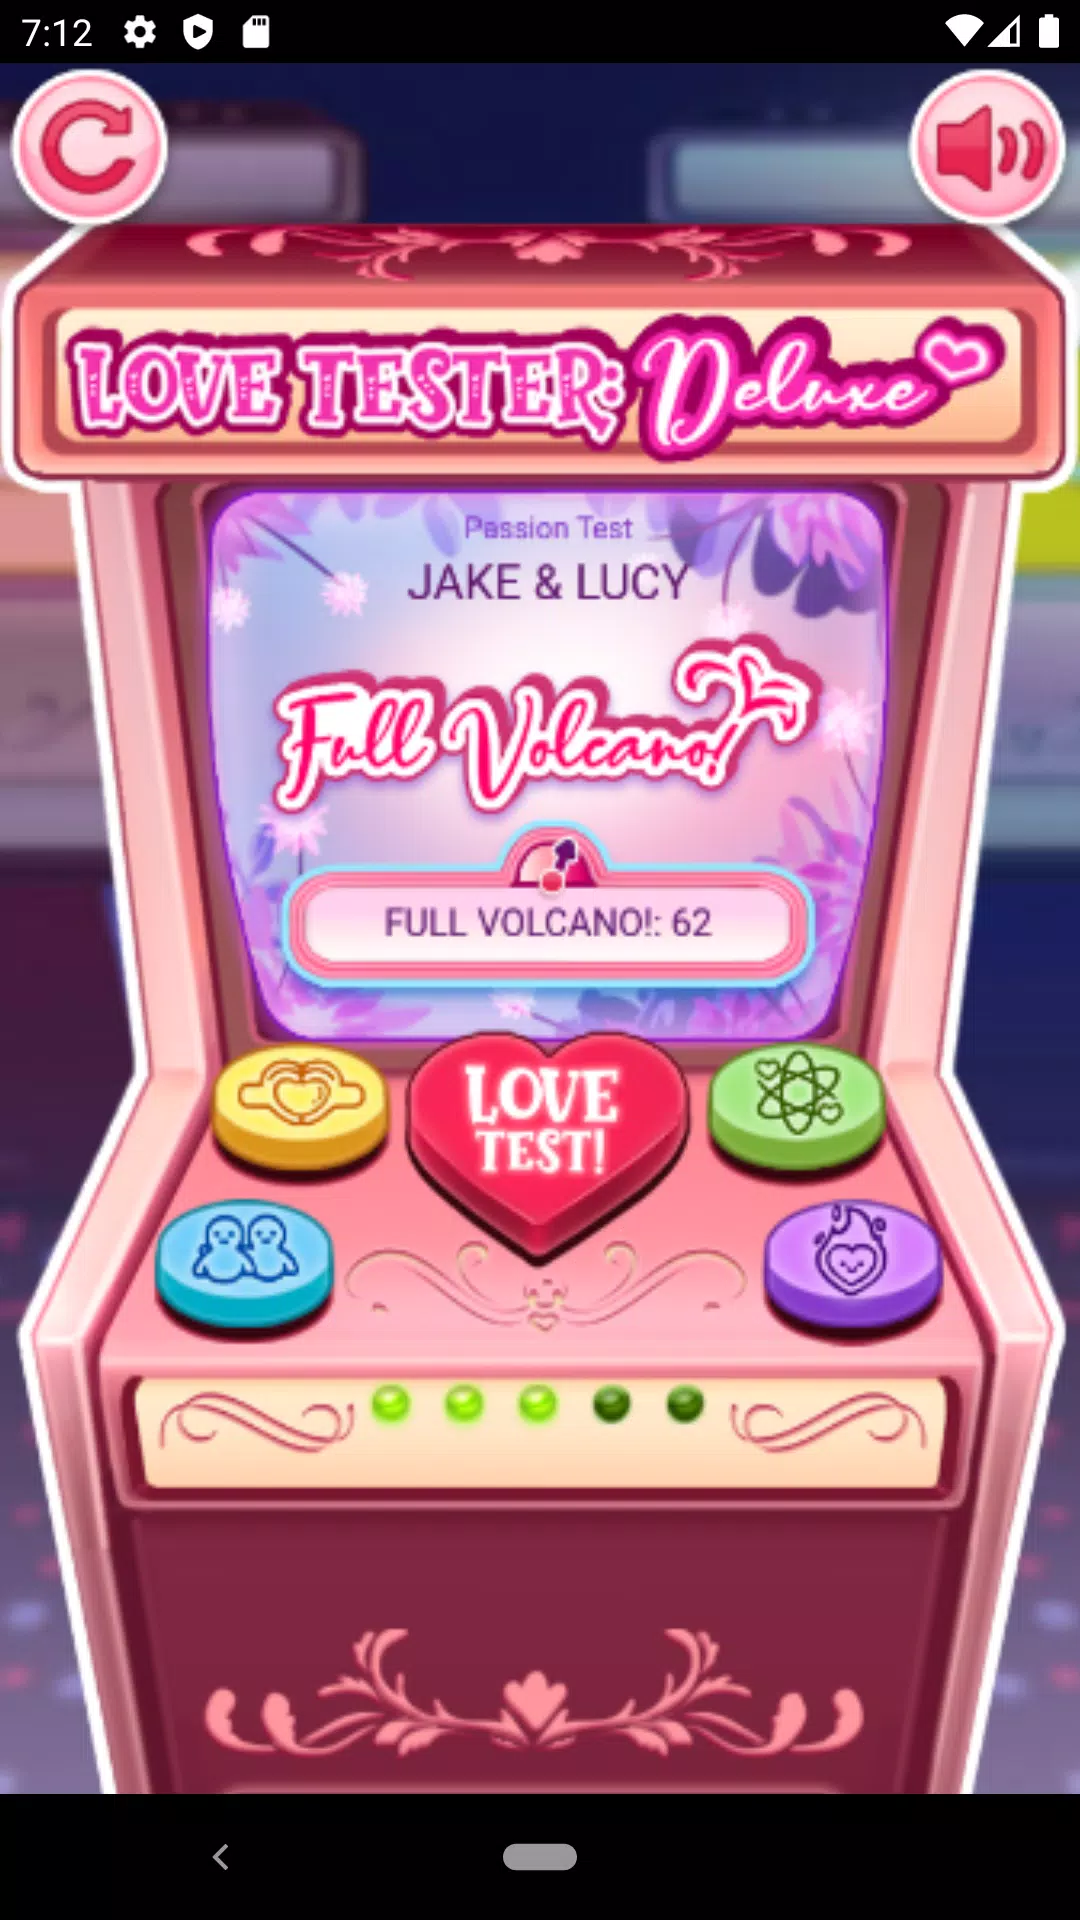 Game-Kouk by Koukouzelis market:Love Tester Deluxe #love4you